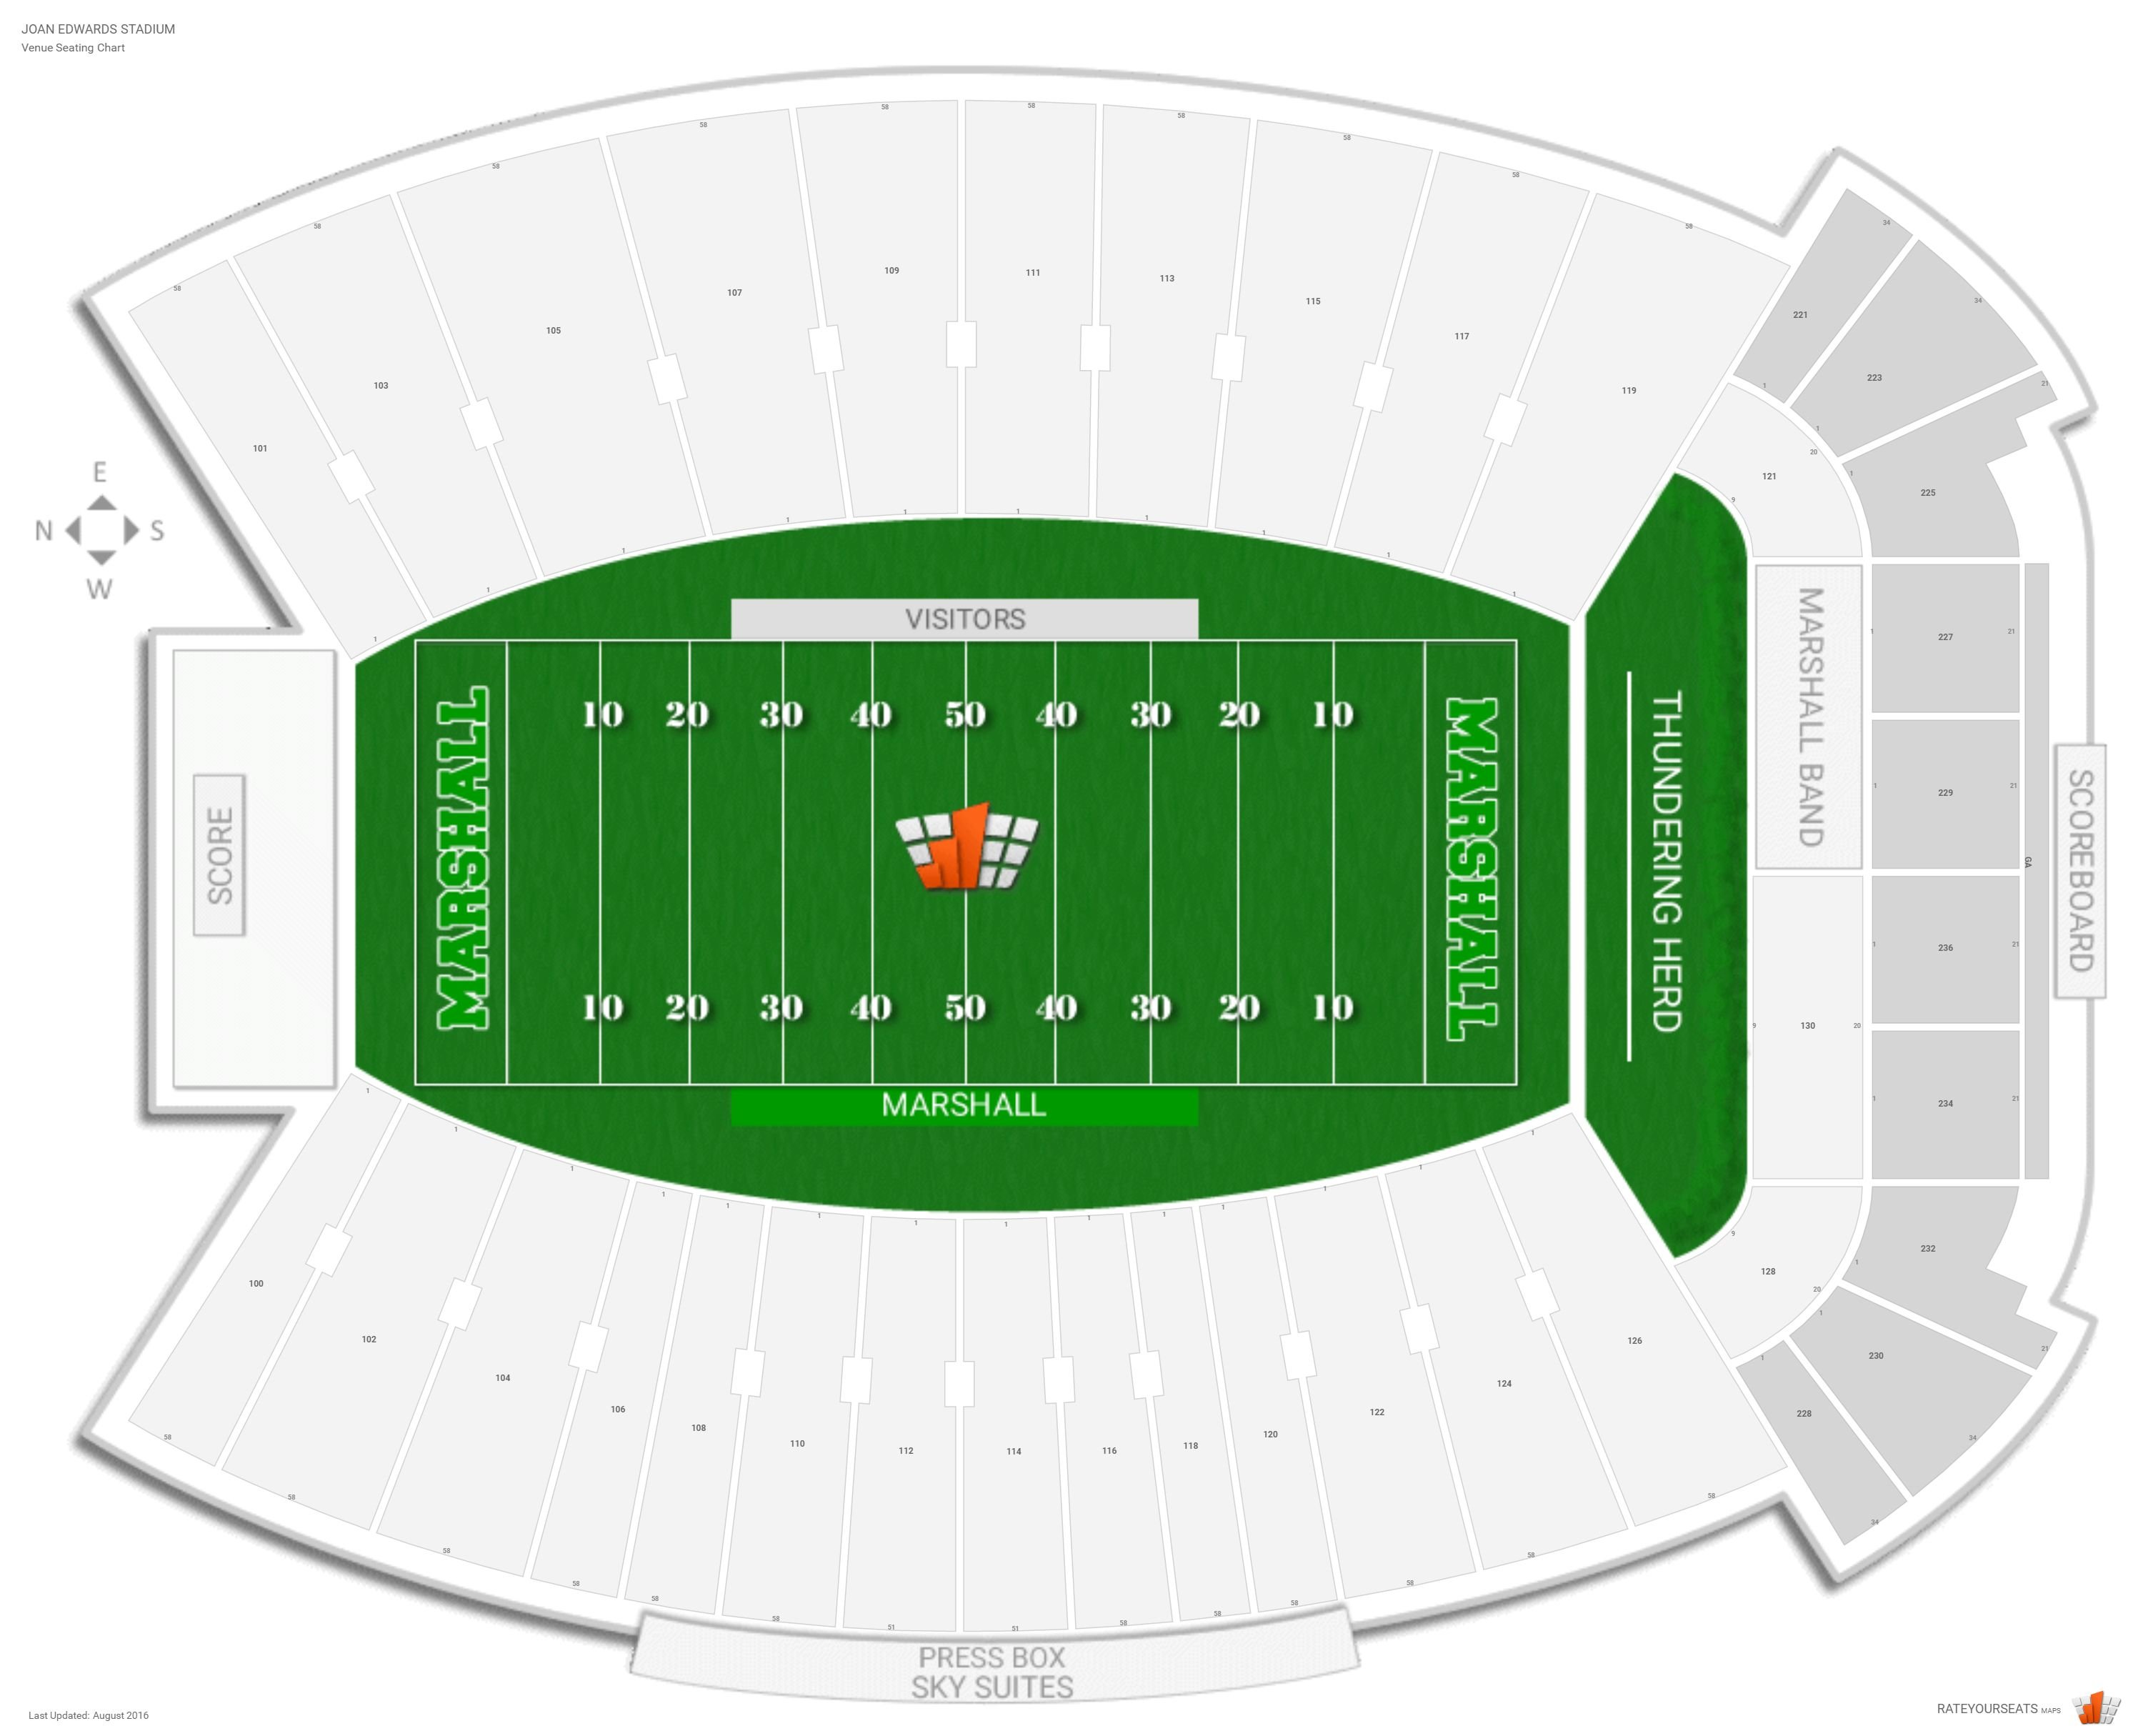 Joan Edwards Stadium (Marshall) Seating Guide - RateYourSeats.com